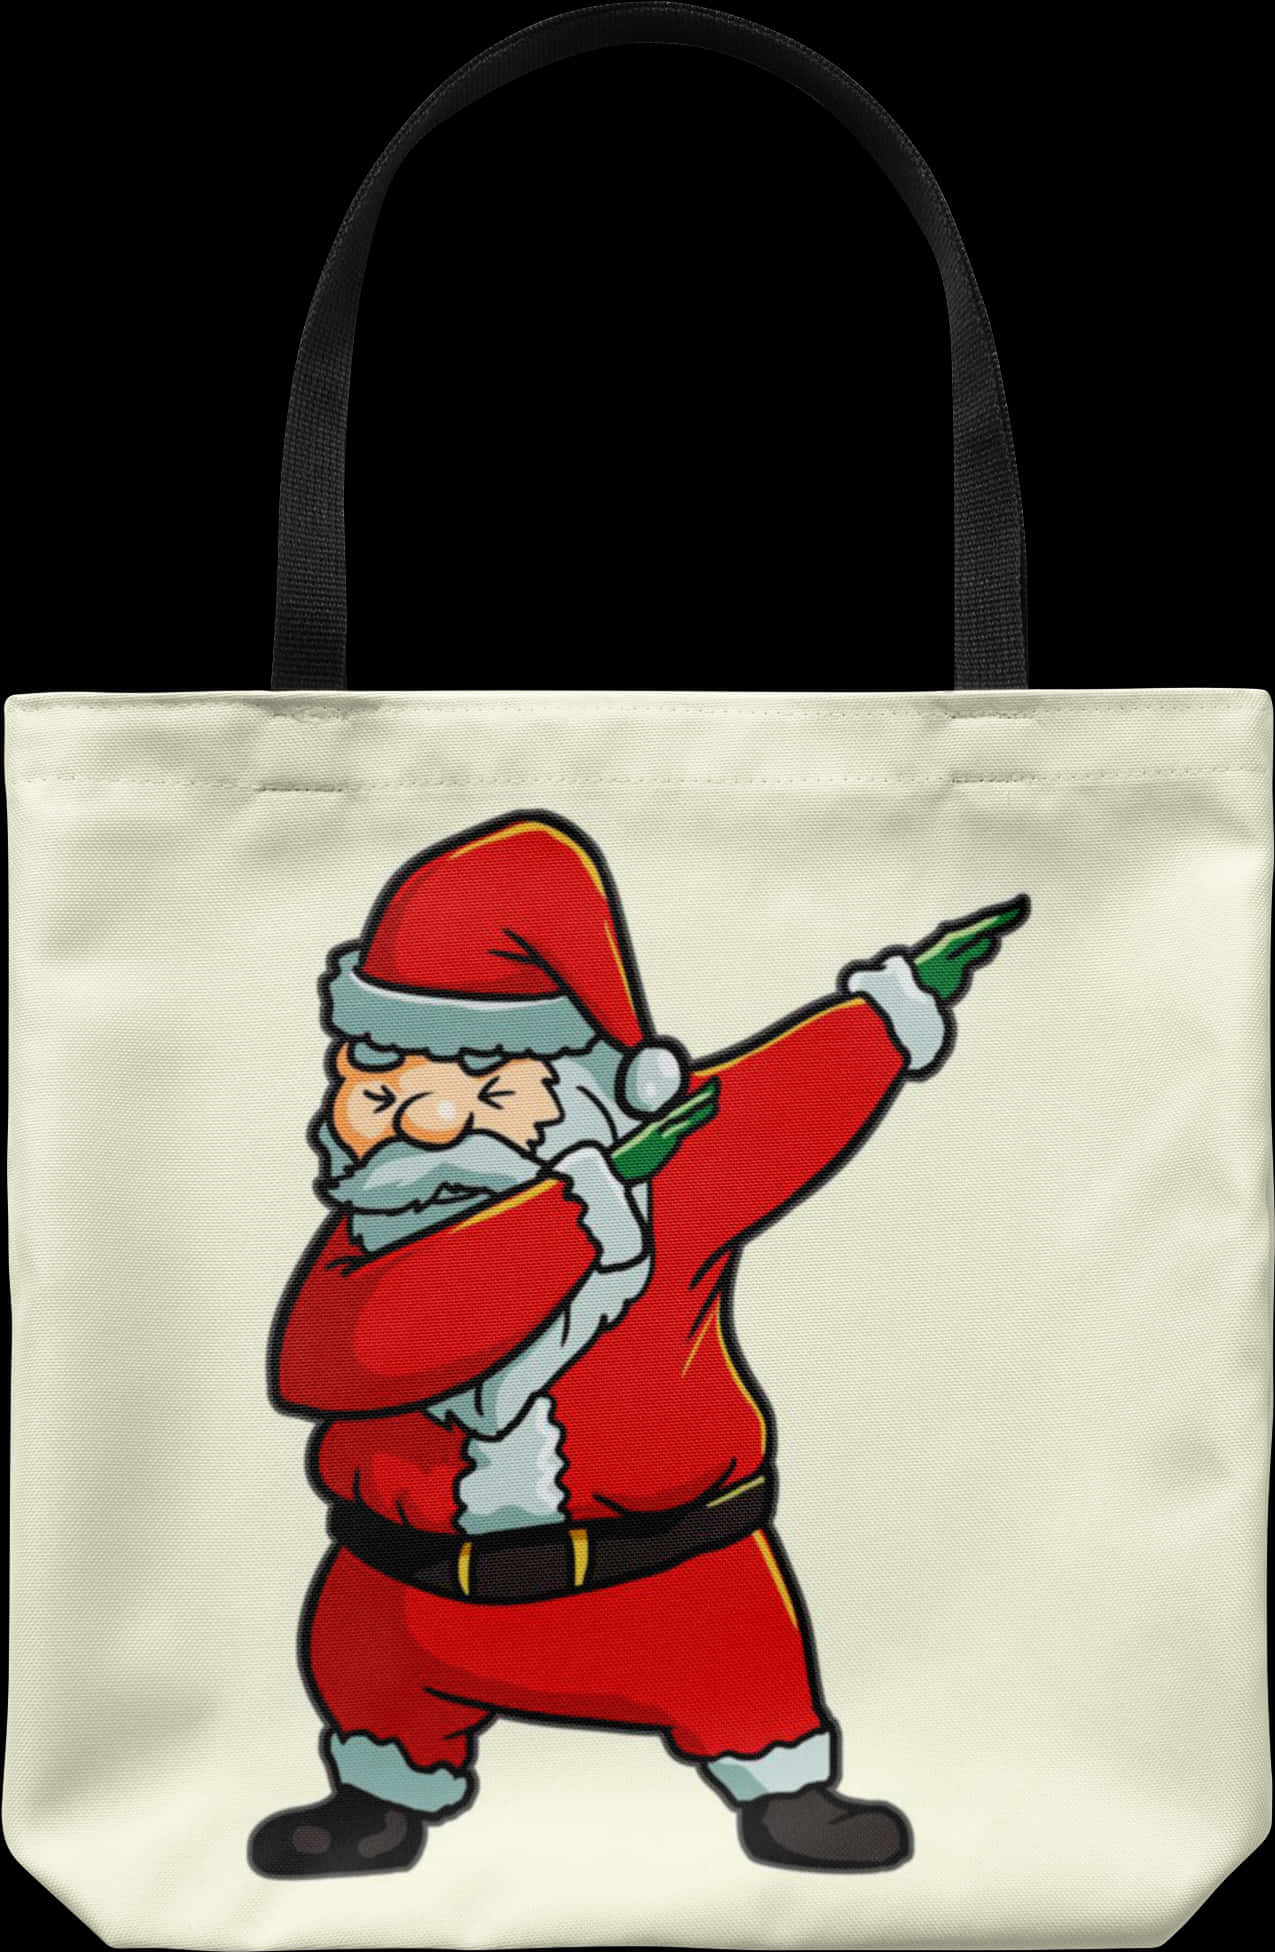 A Bag With A Cartoon Of Santa Claus Dabbing